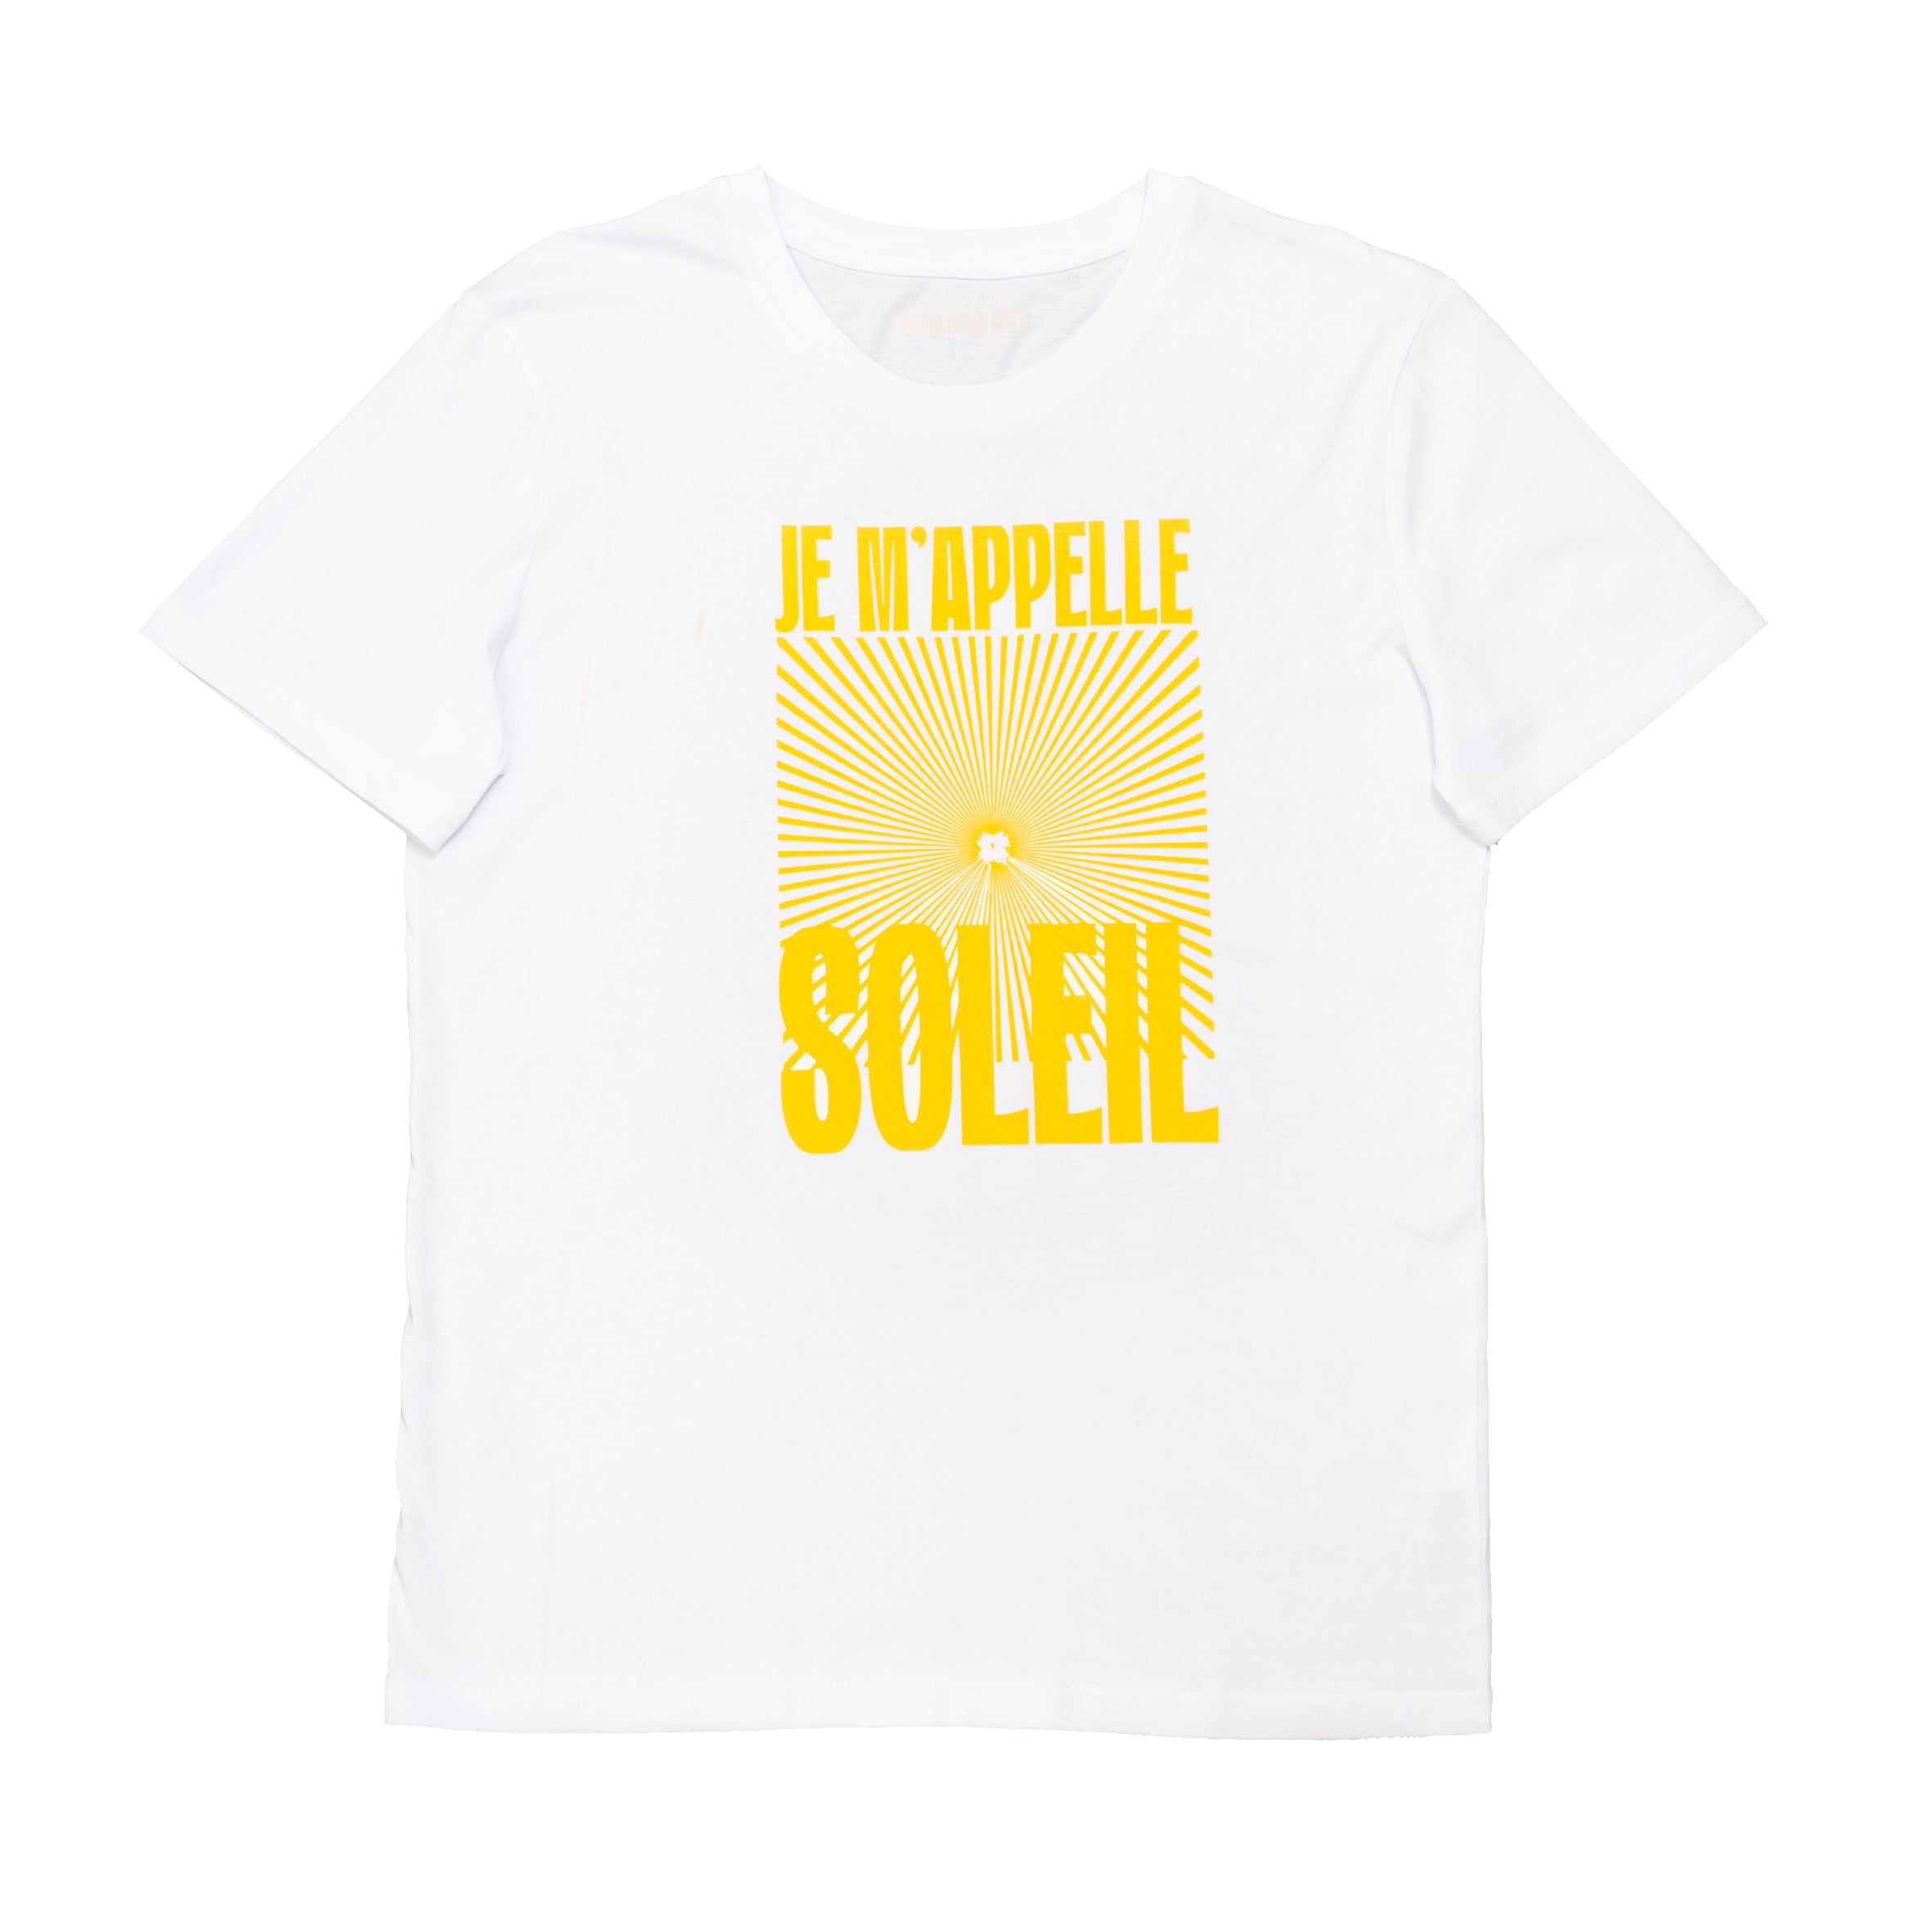 Je m'appelle Soleil T-Shirt - White/Yellow 